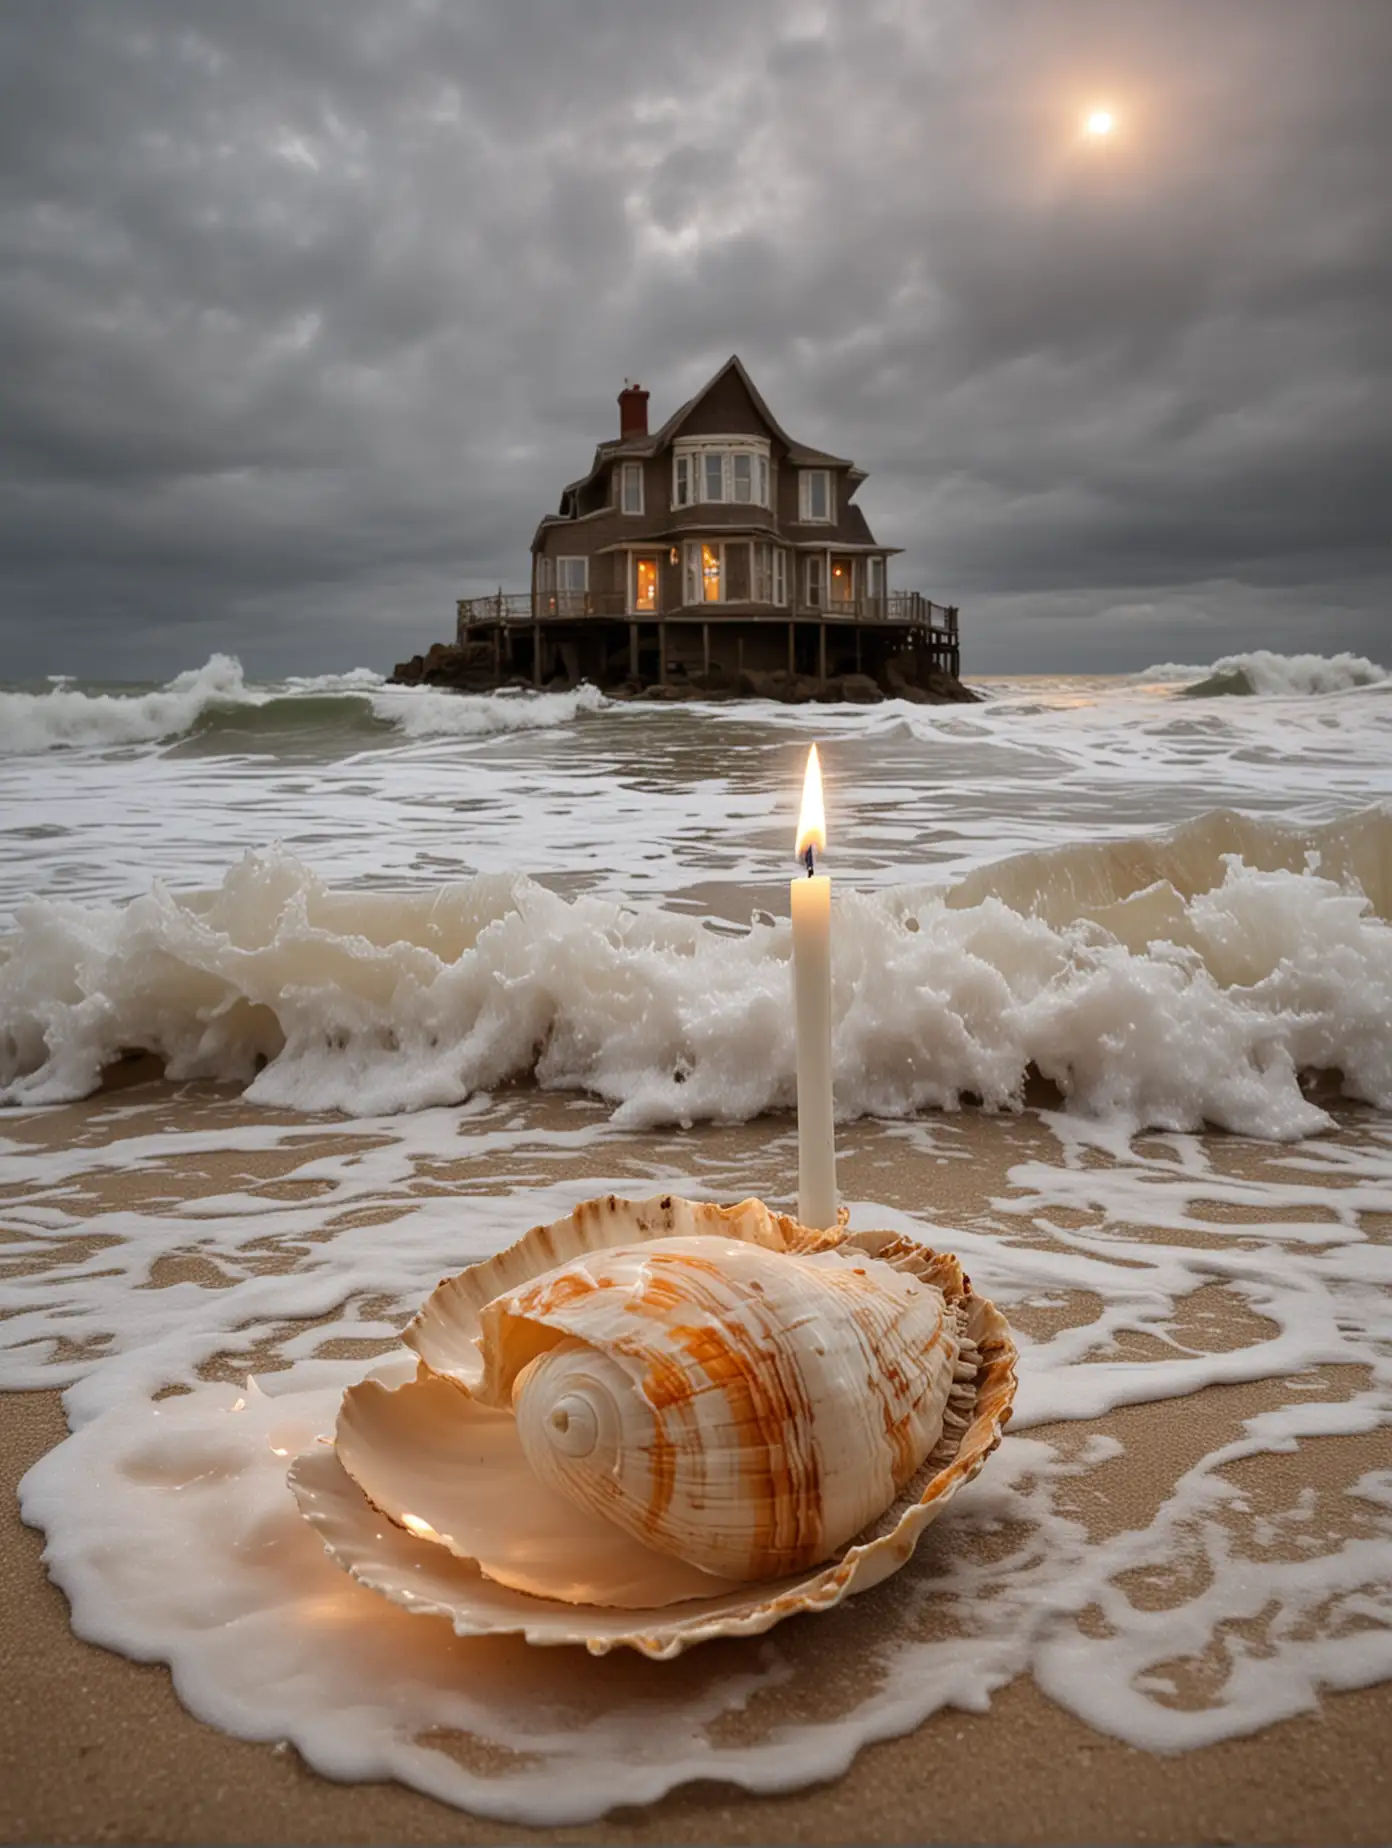 Огромная ракушка,на берегу моря,над ракушкой нависла волна,в середине ракушки домик,в домике -свеча 